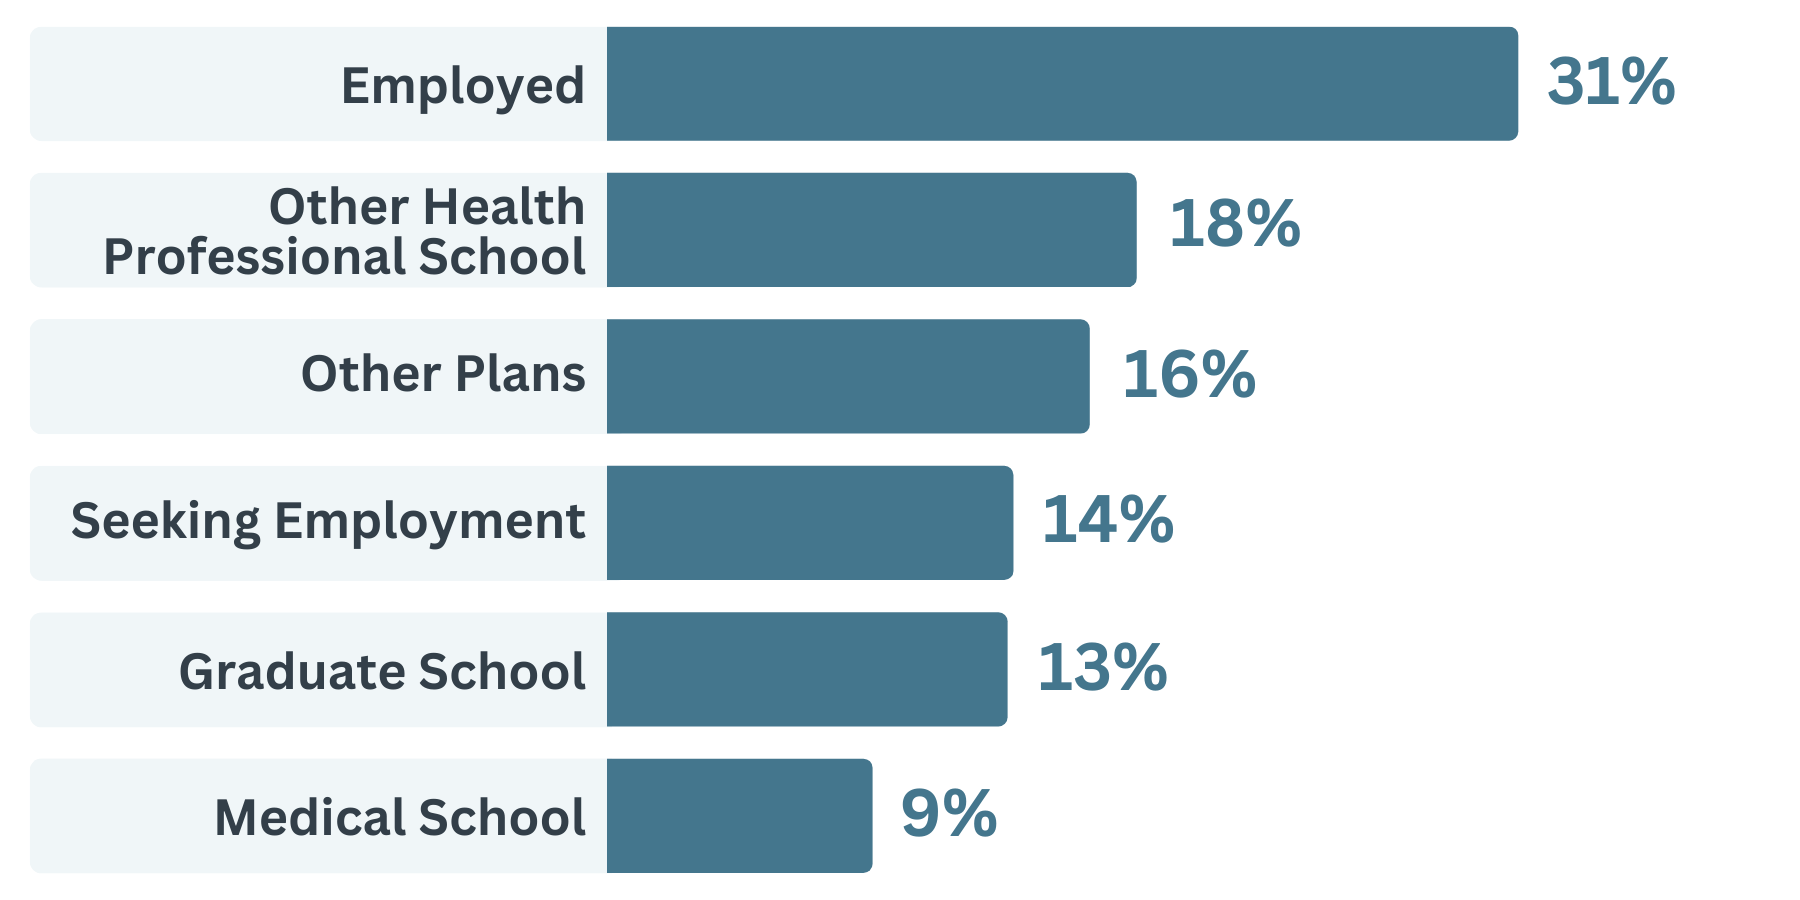 nutrition data: employed 31%, other health professional school 18%, other plans 16%, seeking employment 14%, graduate school 13%, medical school 9%